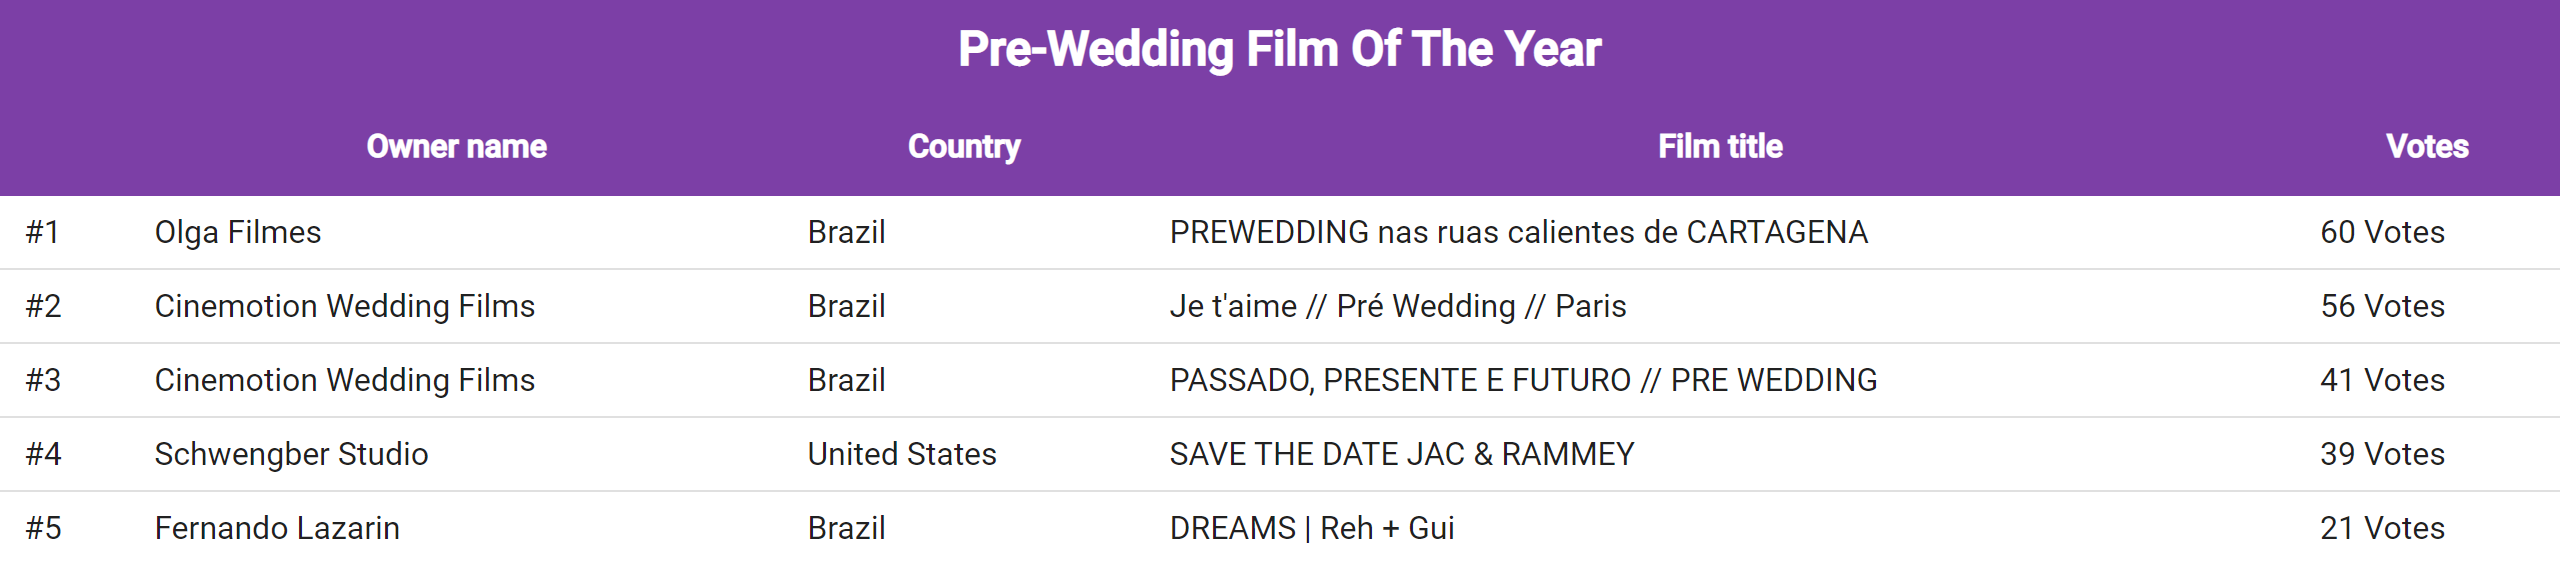 pre_wedding_film_of_the_year_2021